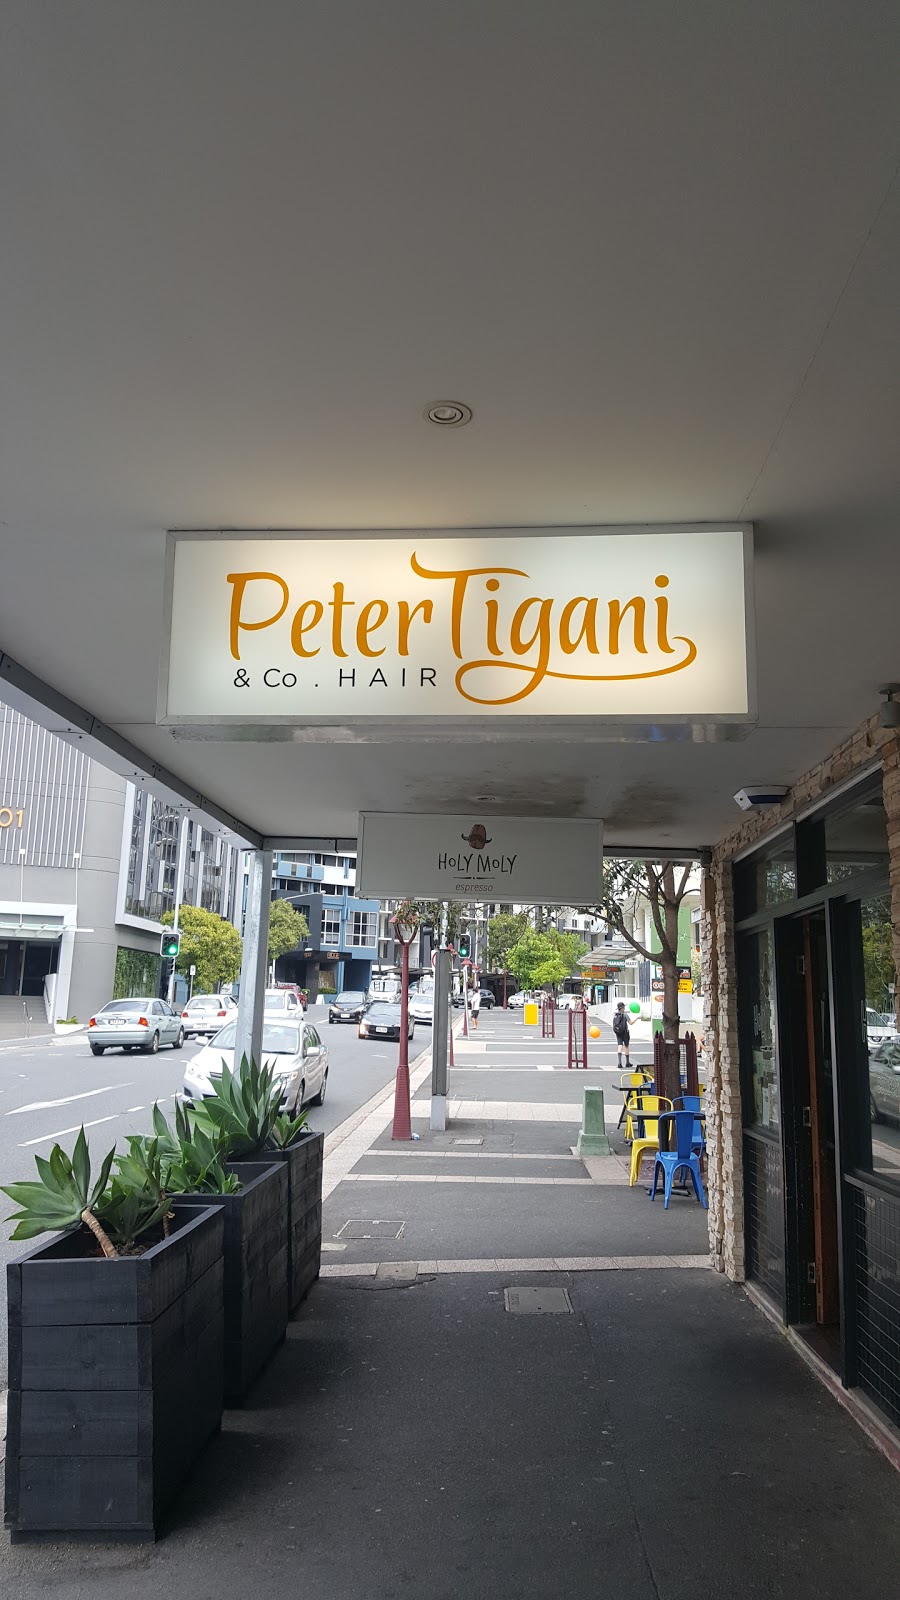 Peter Tigani & Co. Hair | 2/226 Leichhardt St, Spring Hill QLD 4000, Australia | Phone: (07) 3832 9468